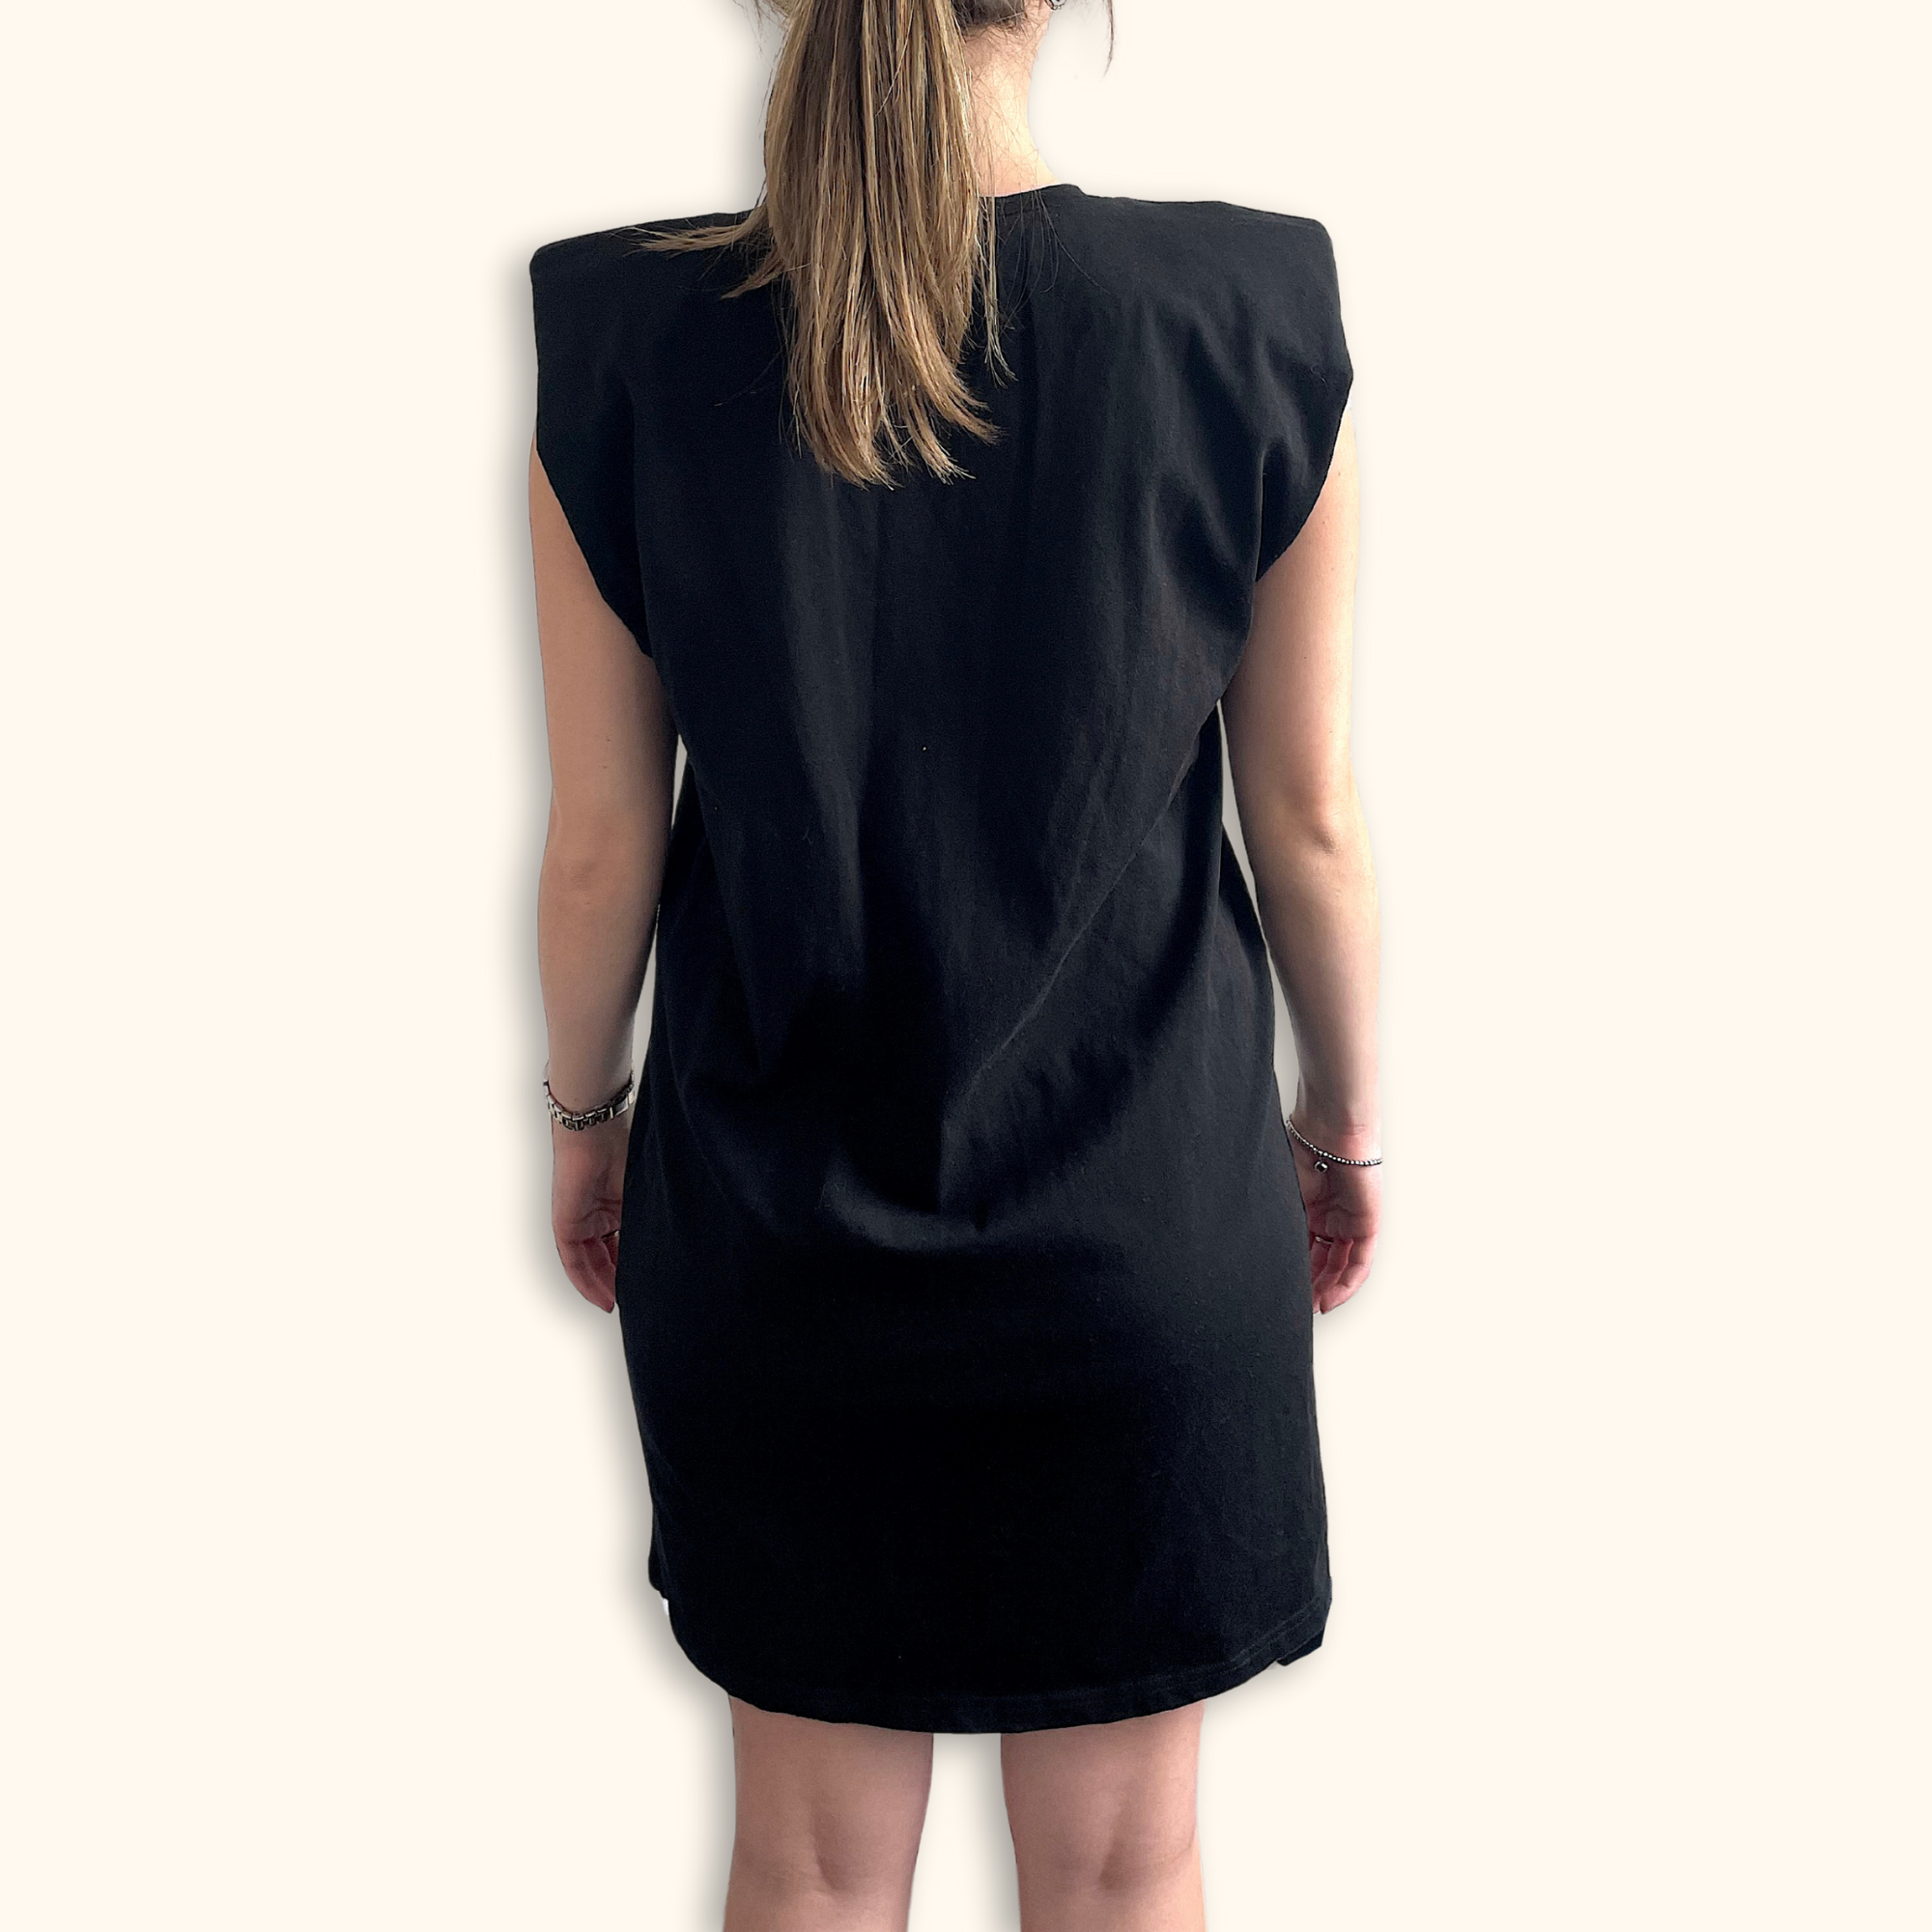 Zara Black Sleeveless Dress with Padded Shoulders - Size Small - Zara - Dresses